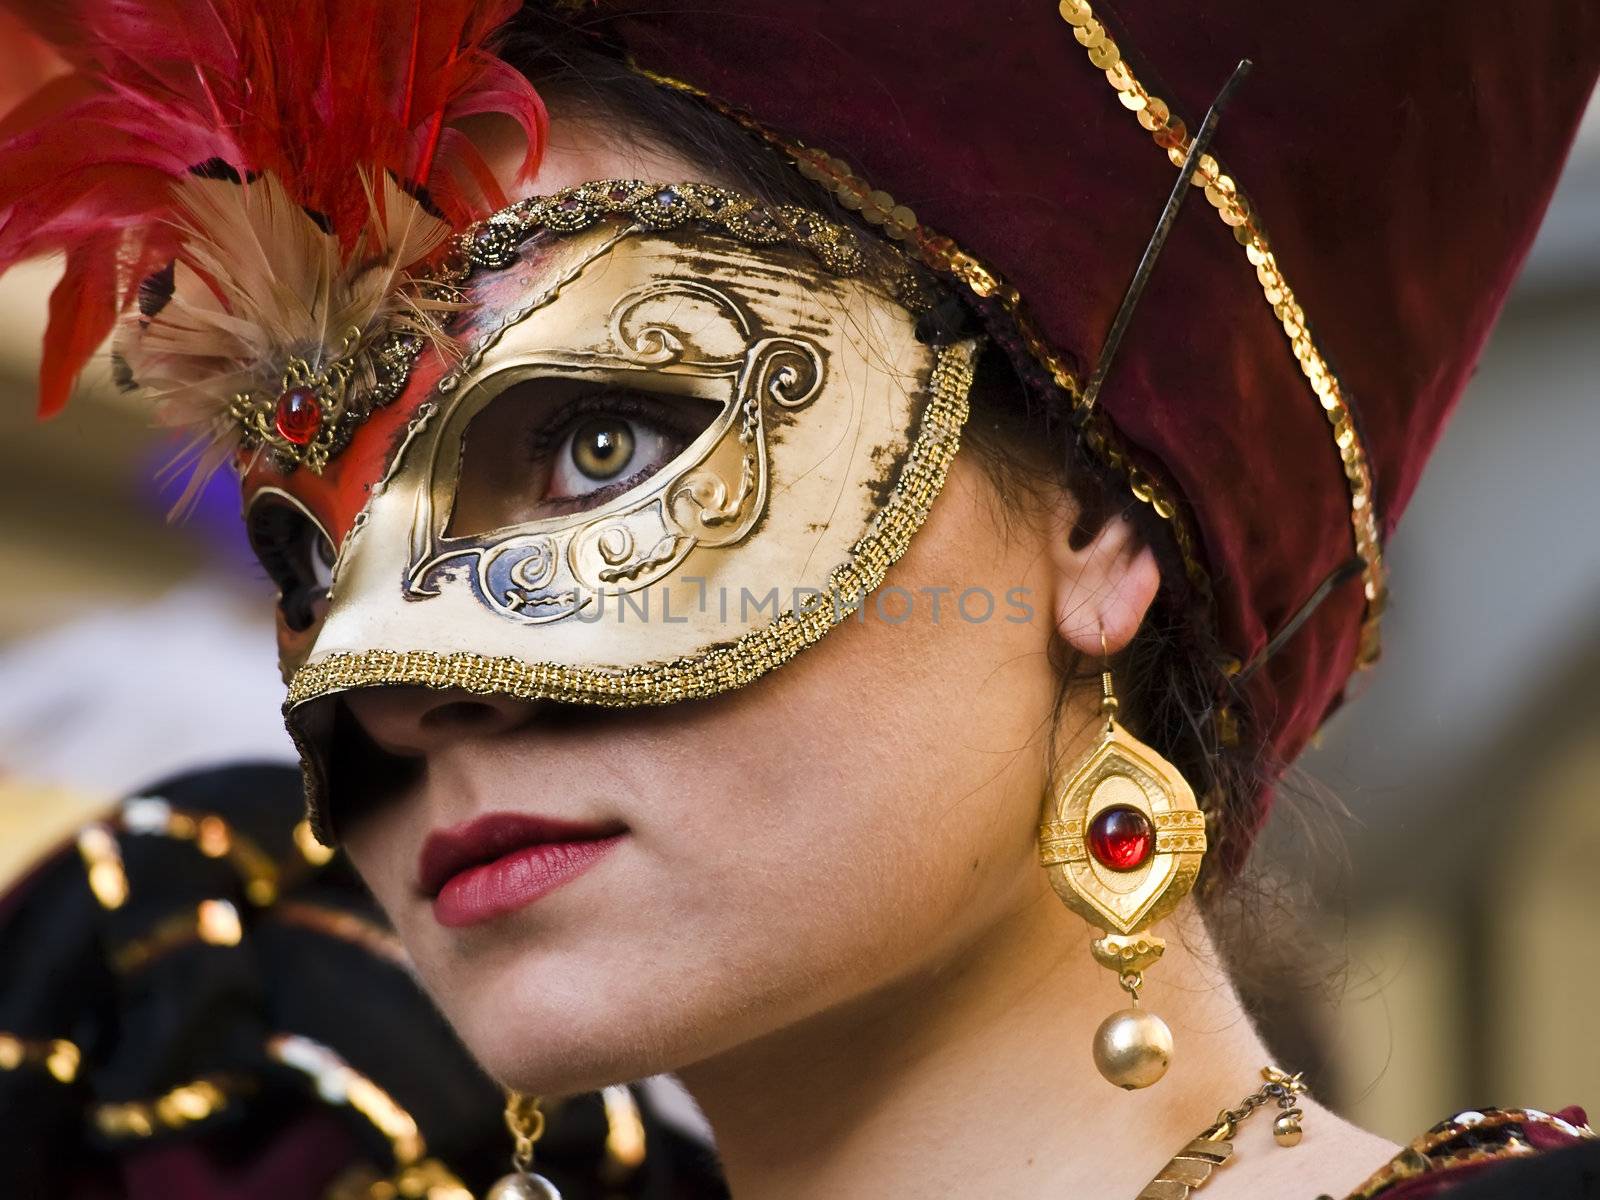 Venetian Princess by PhotoWorks